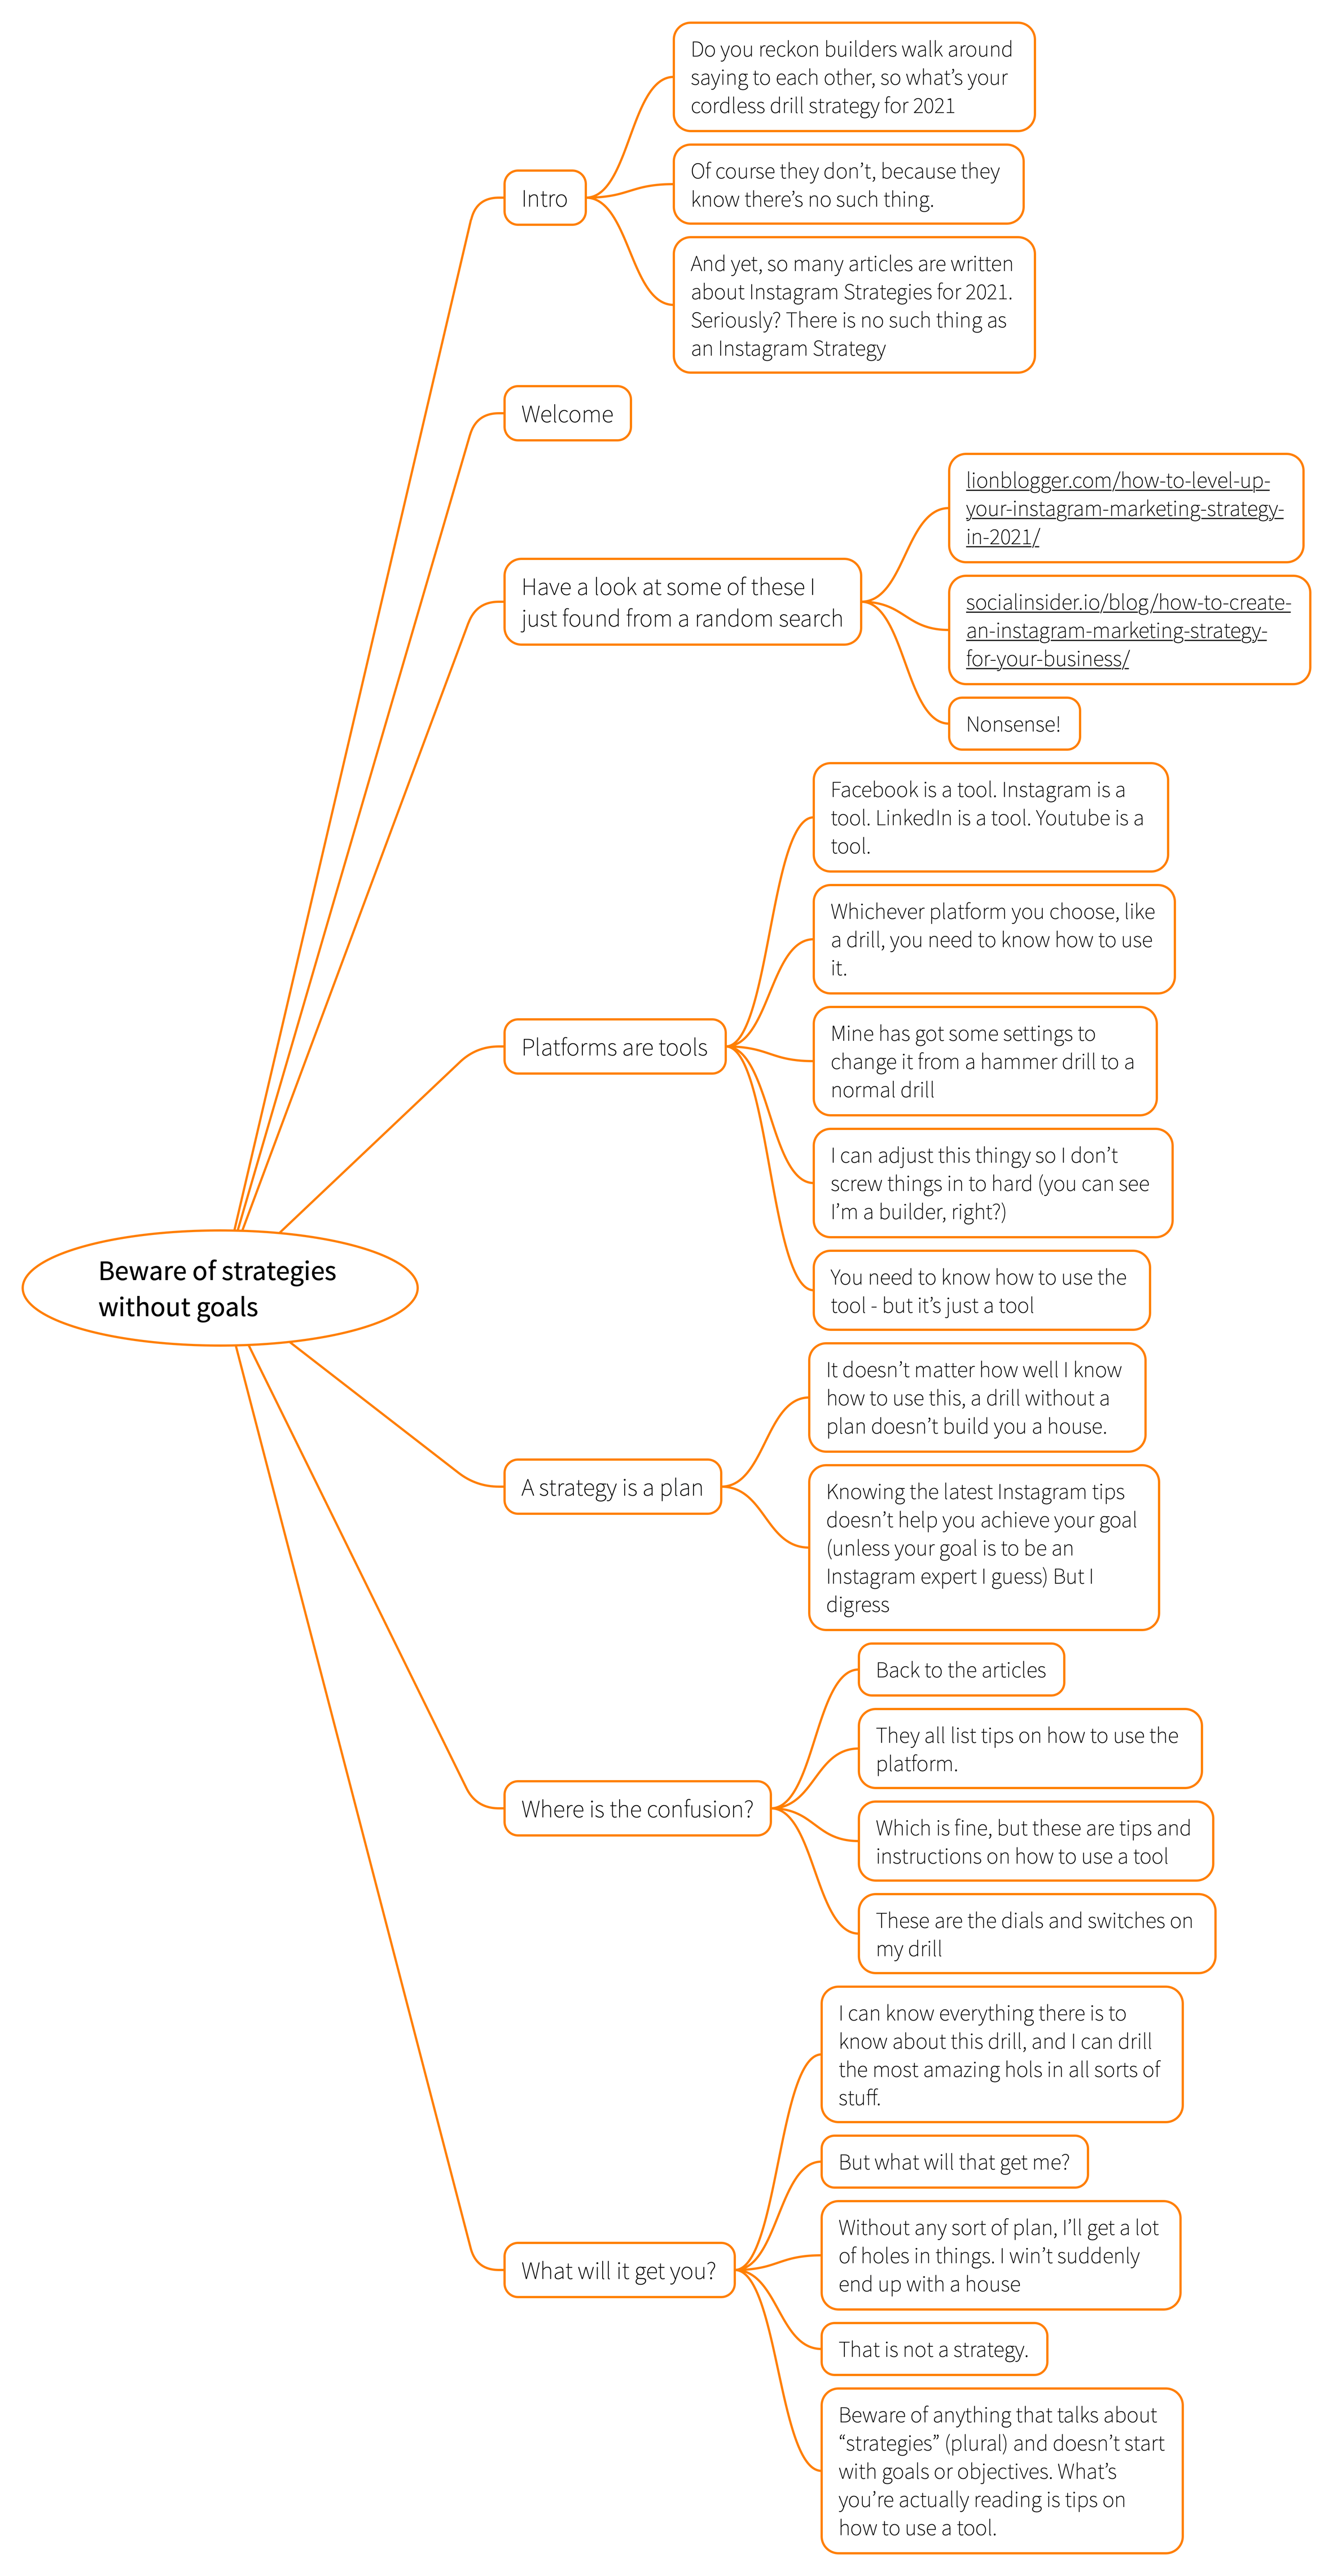 Mindmap of my notes